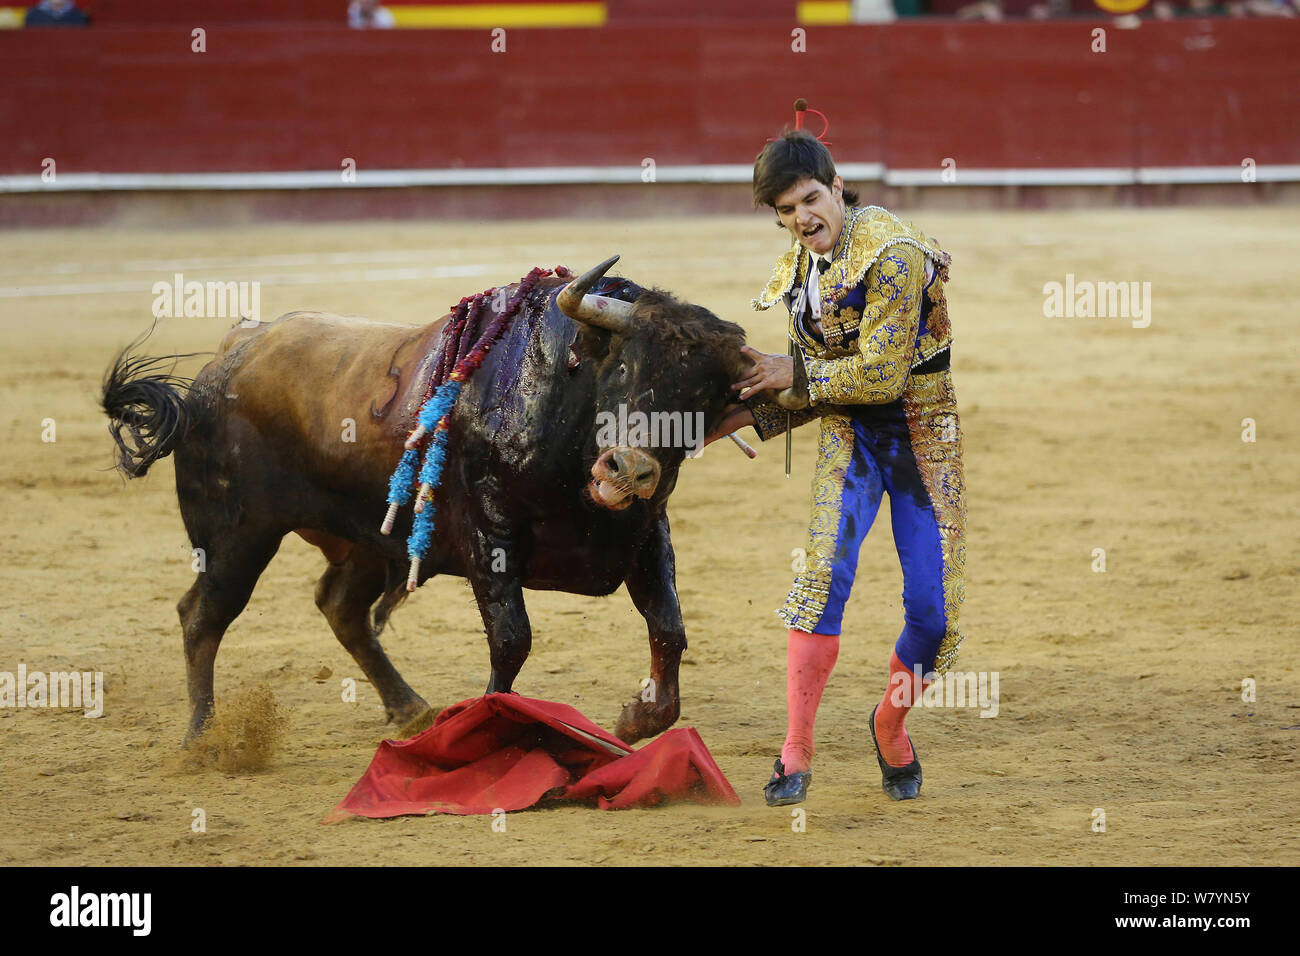 Bull fighting, torero grabbing bull by the horns. Bull has barbs / banderillas, embedded shoulder from Tercio de Banderillas round of the bullfight. Plaza de Toros, Valencia, Spain. July 2014. Stock Photo